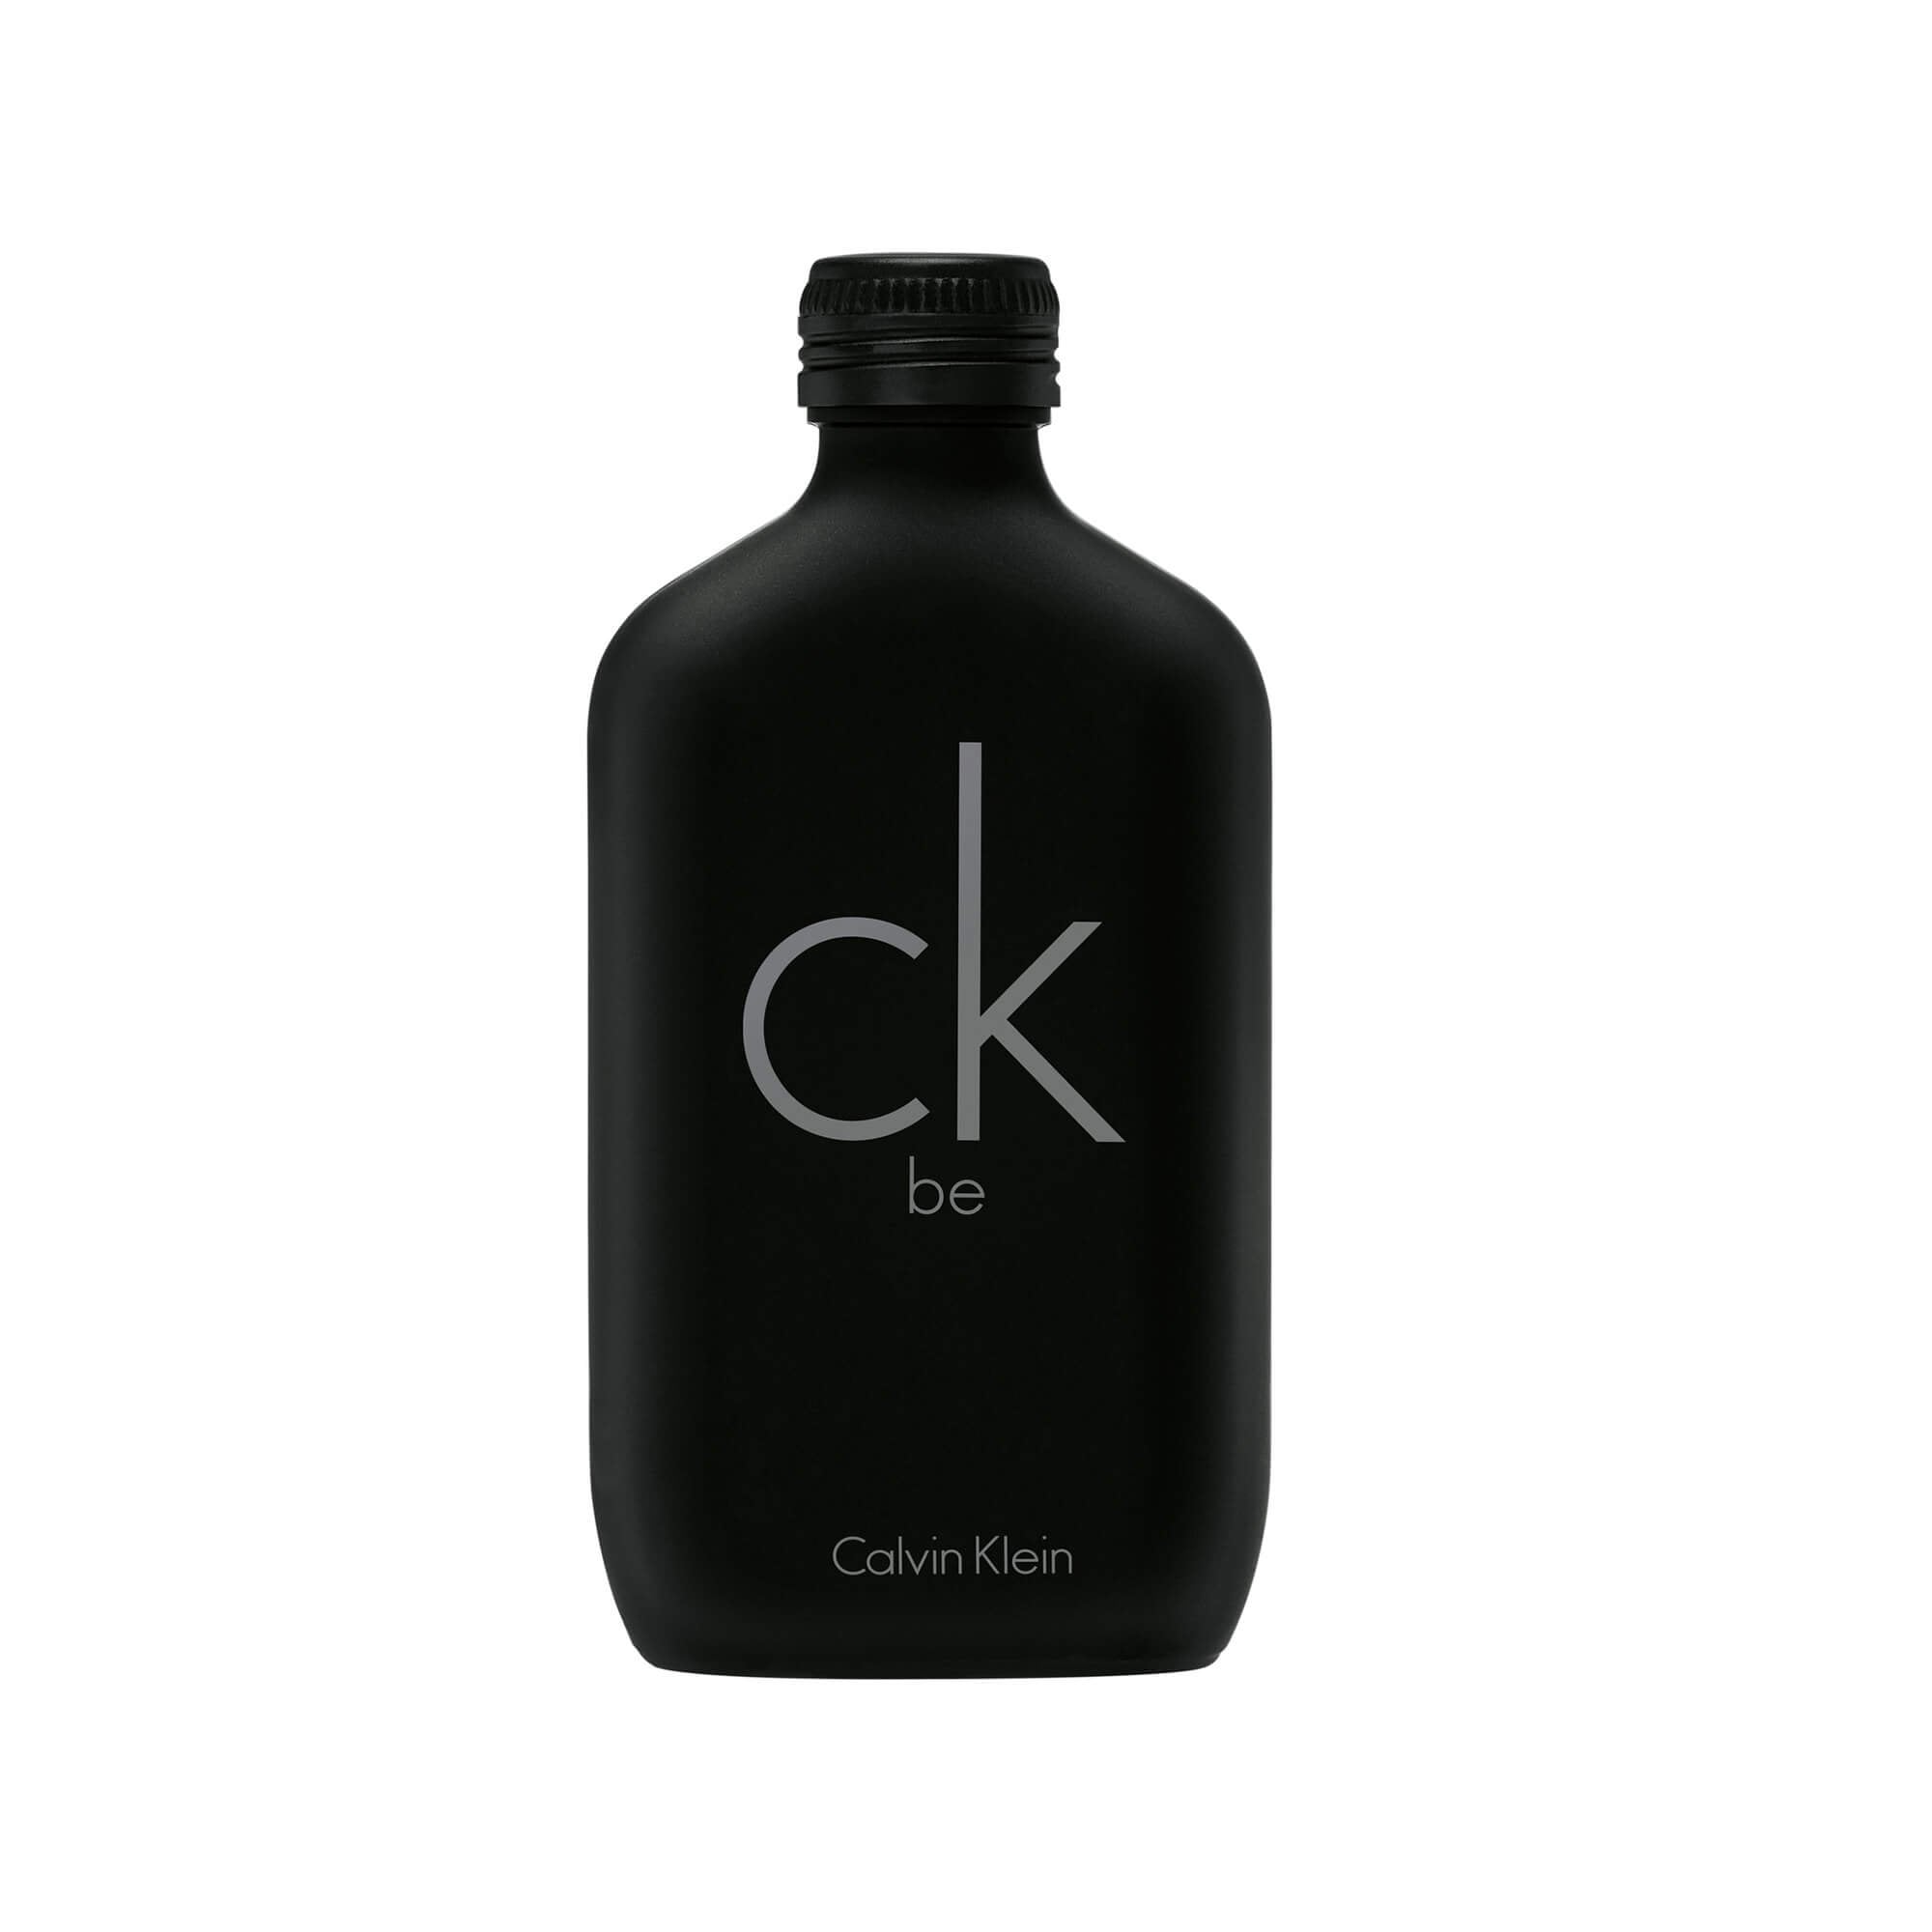 Calvin Klein CK Be Eau De Toilette - 200ml  | TJ Hughes